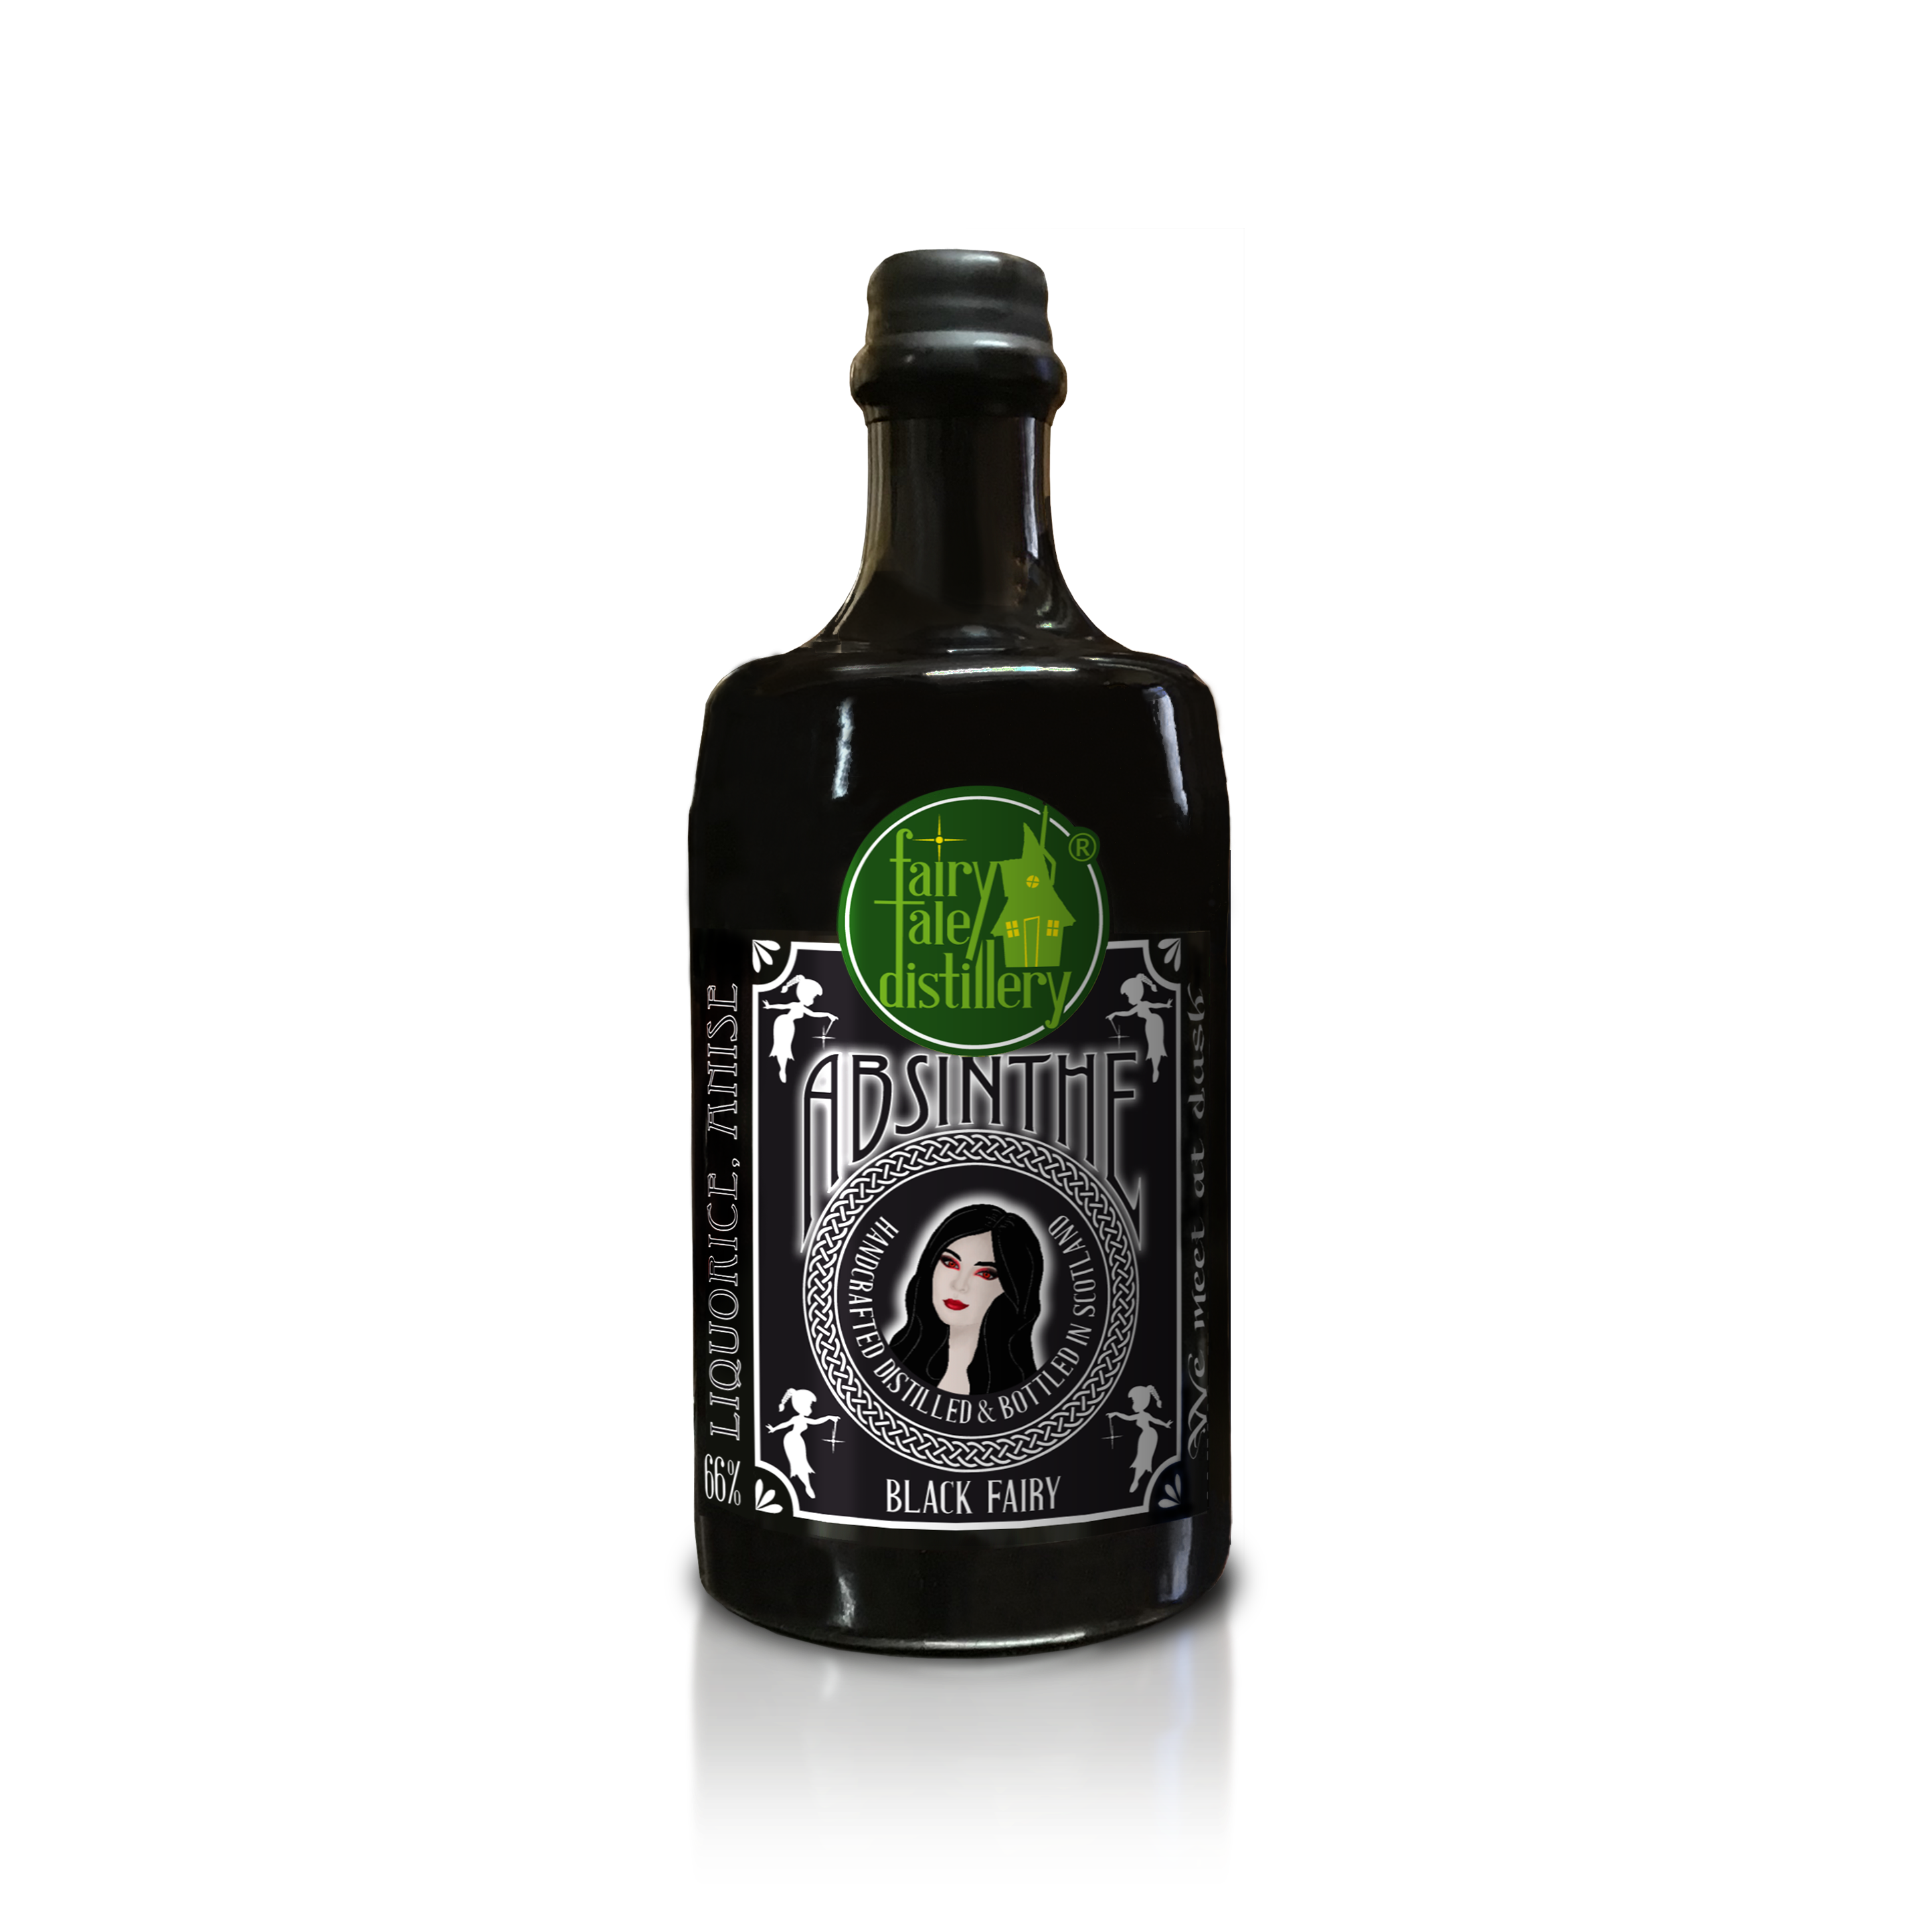 Black Fairy Highland Absinthe bottle 0,7l from Fairytale Distillery